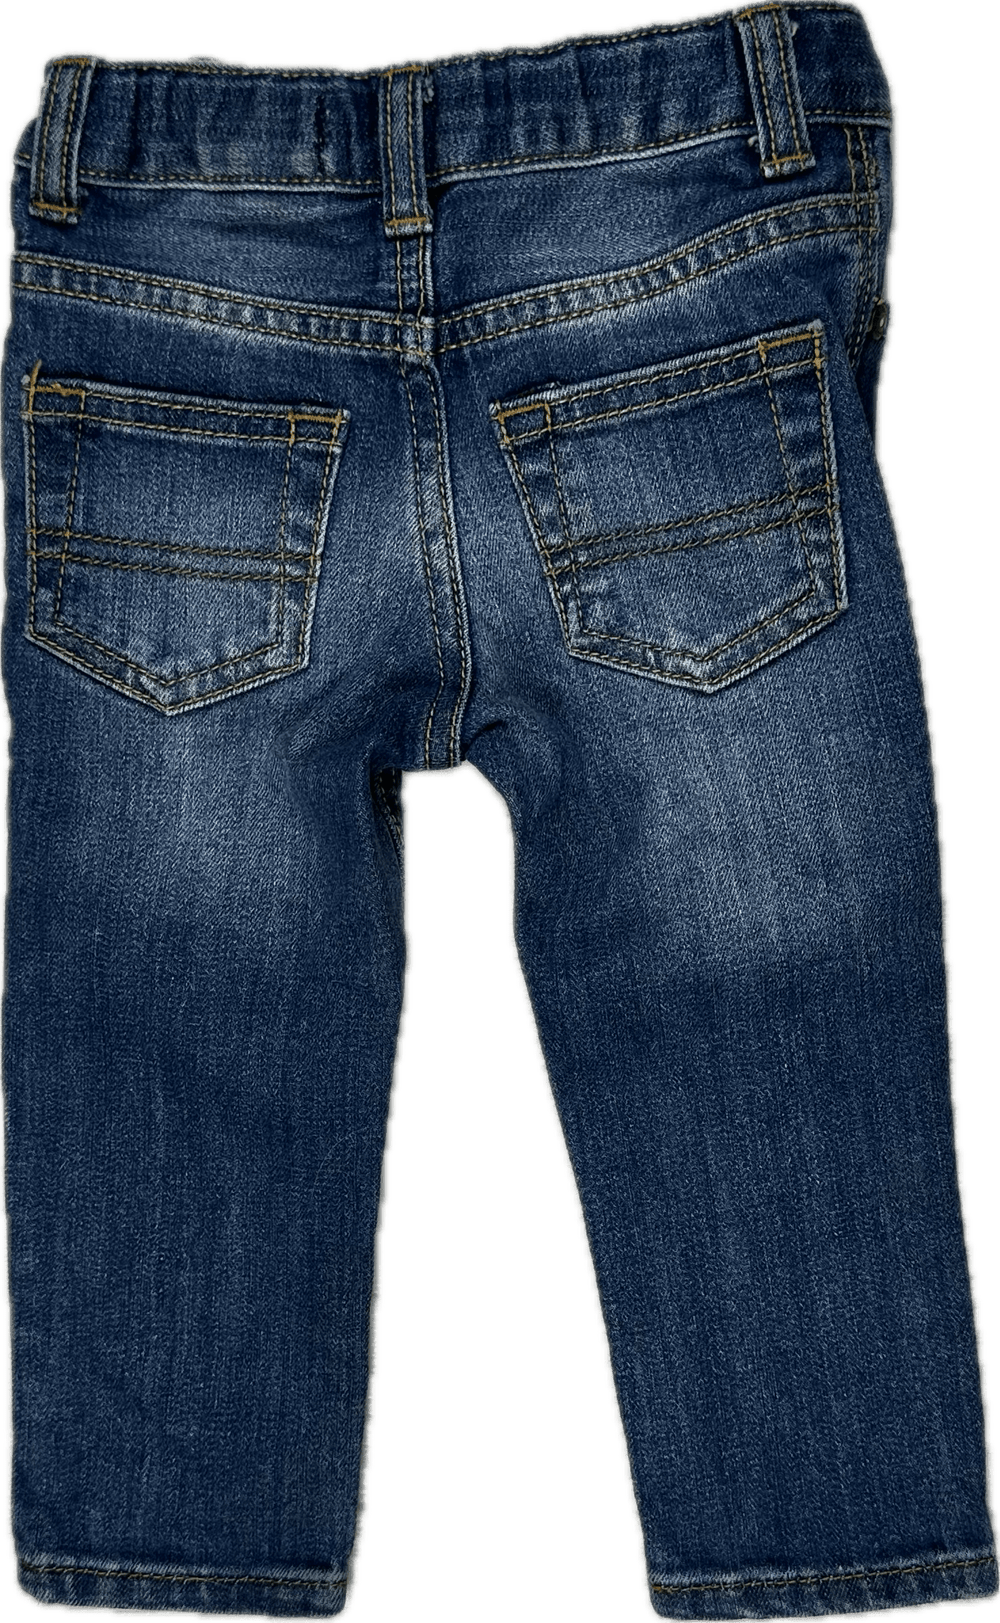 Osh Kosh B'gosh 'Skinny' Jeans - Size 18M - Jean Pool